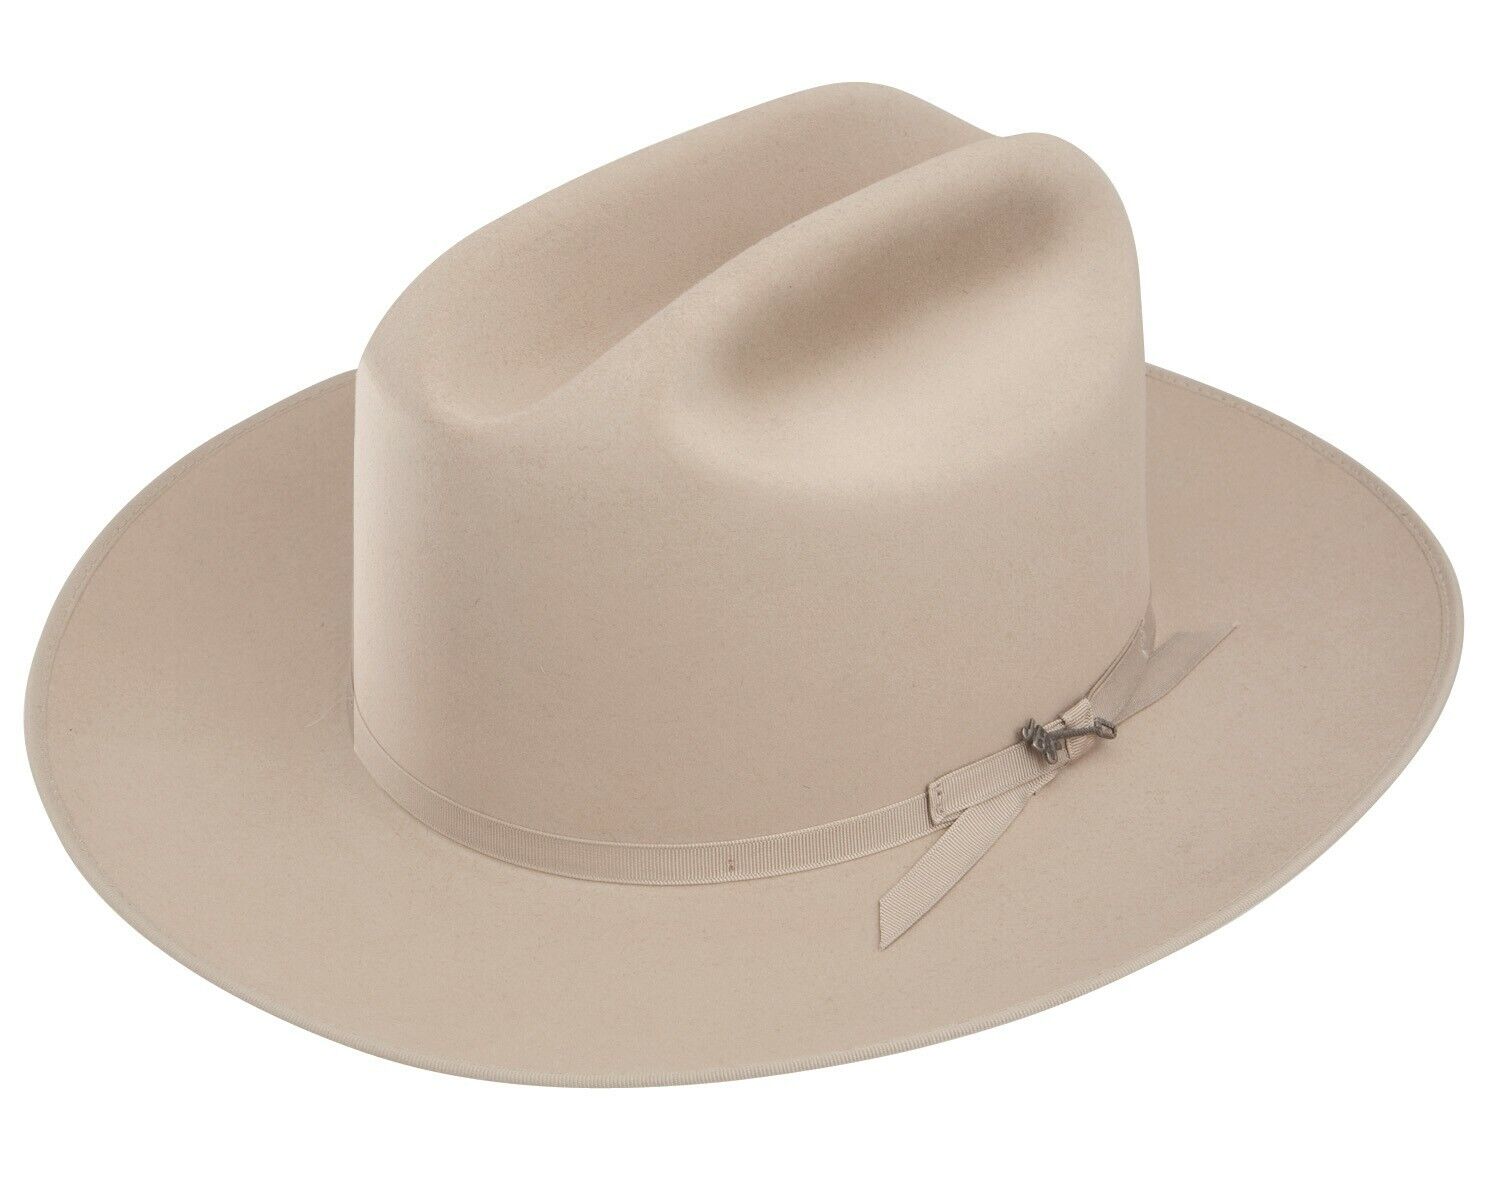 Stetson Open Road 6X Fur Felt Cowboy Hat: Silverbelly, Black, Chocolate